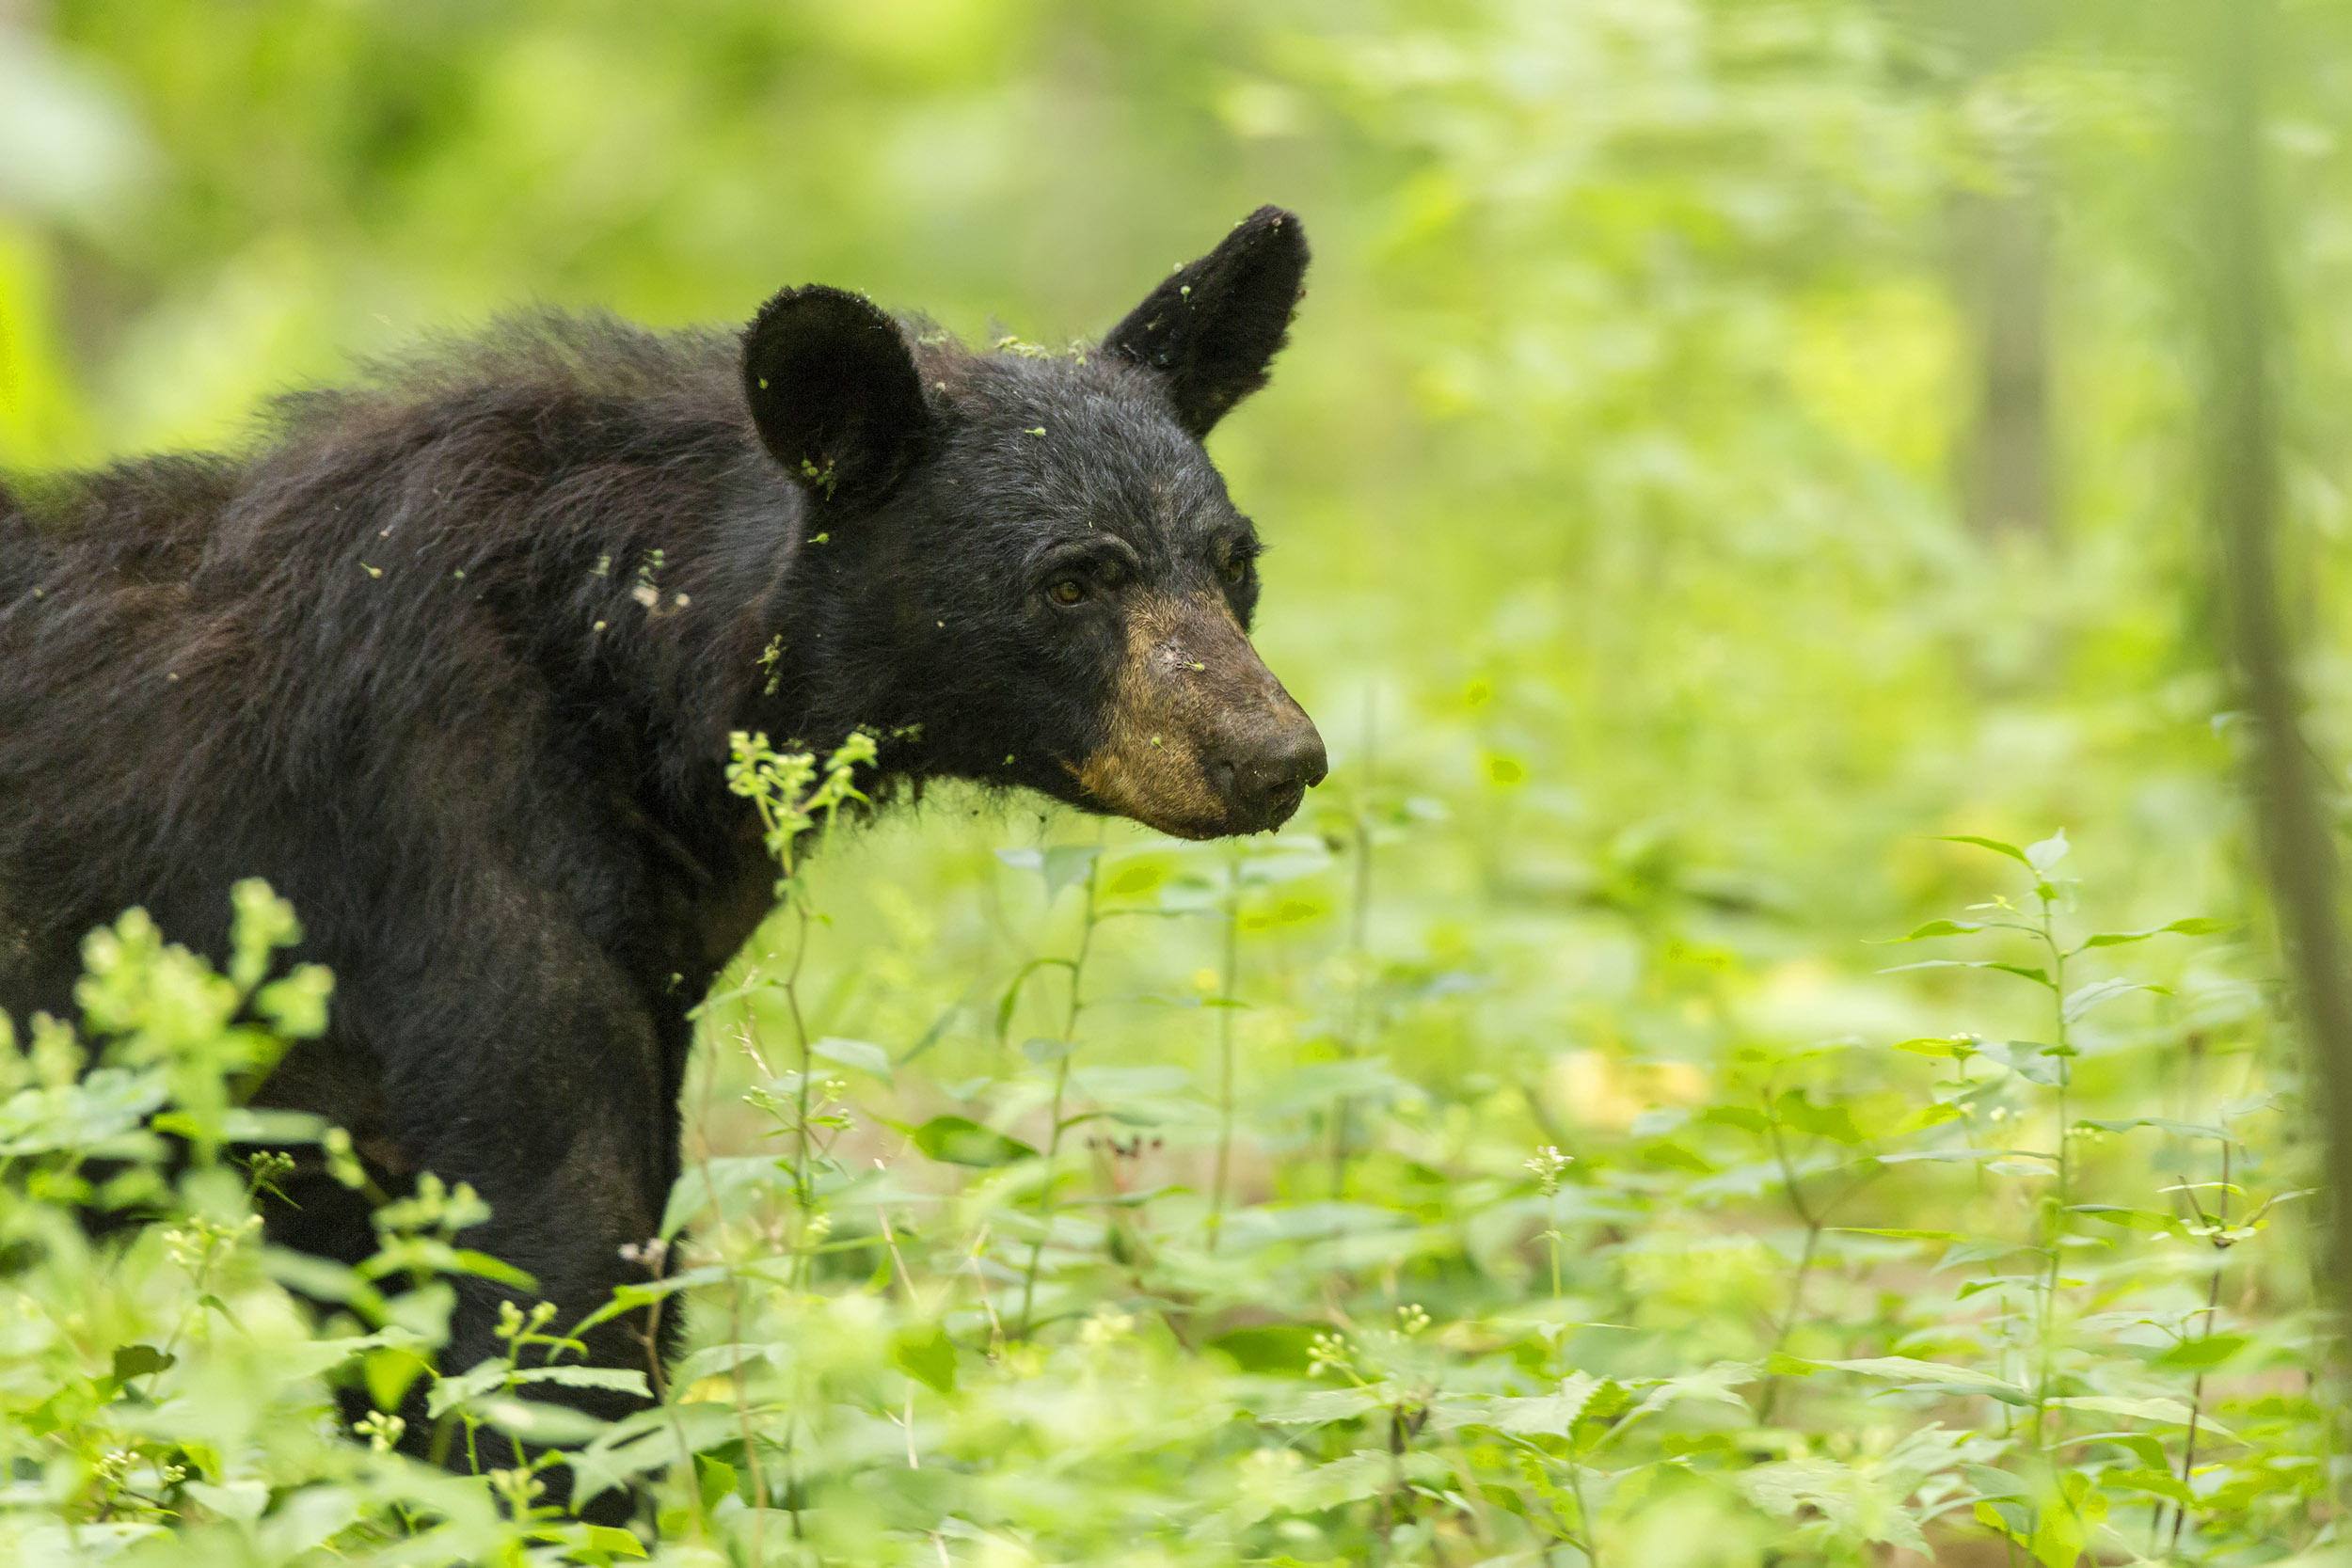 Researching black bears in winter dens